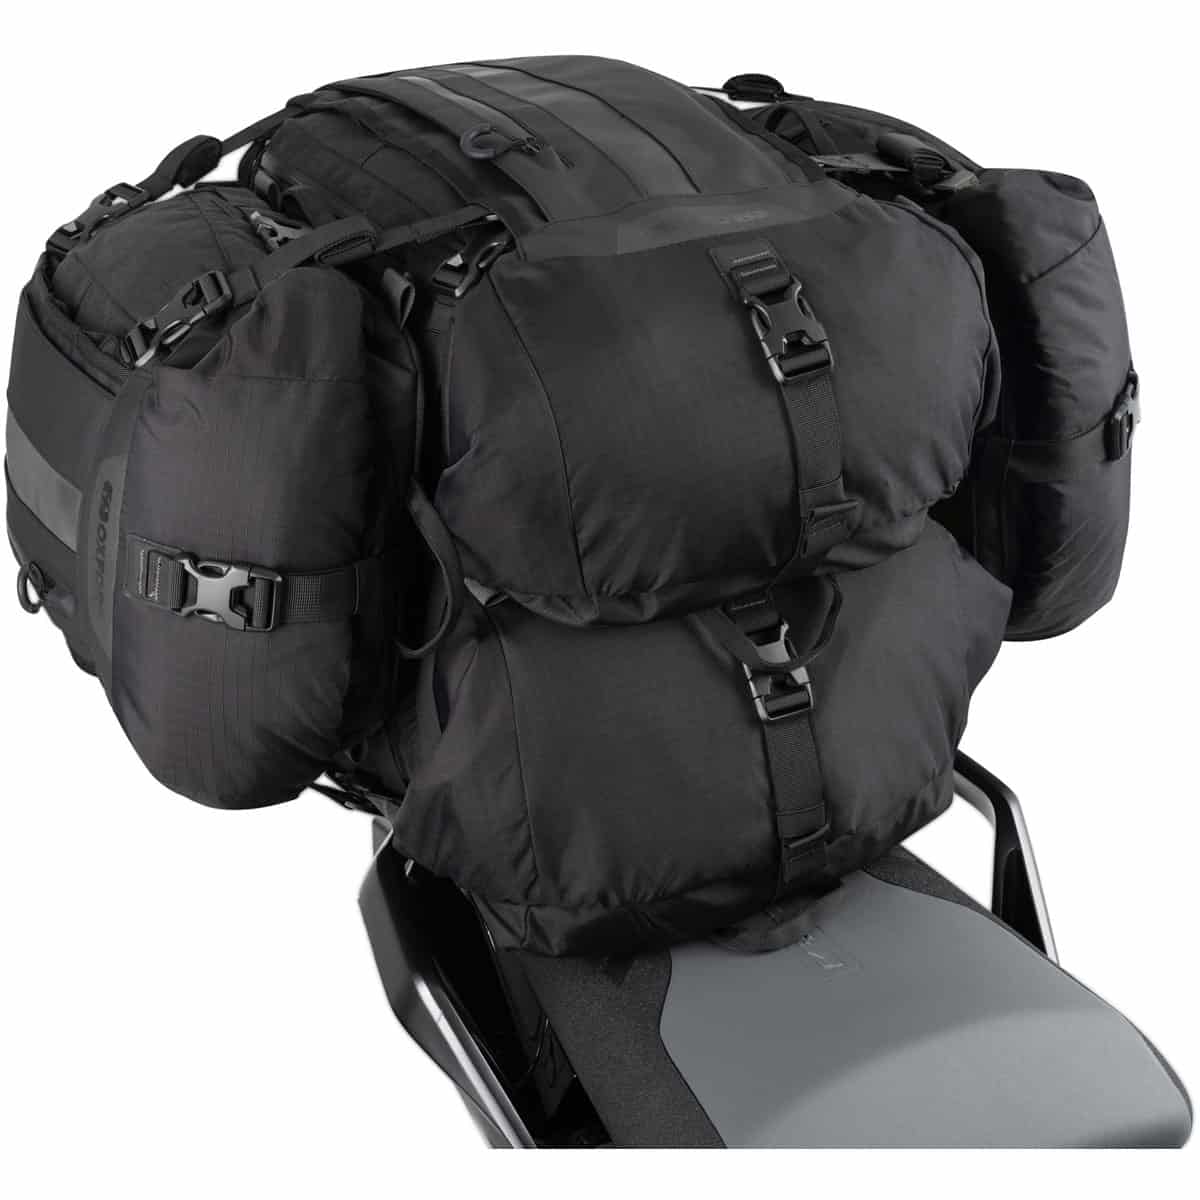 Waterproof Oxford 30 Litre Atlas Backpack: Ultimately versatile rucksack with a lifetime guarantee